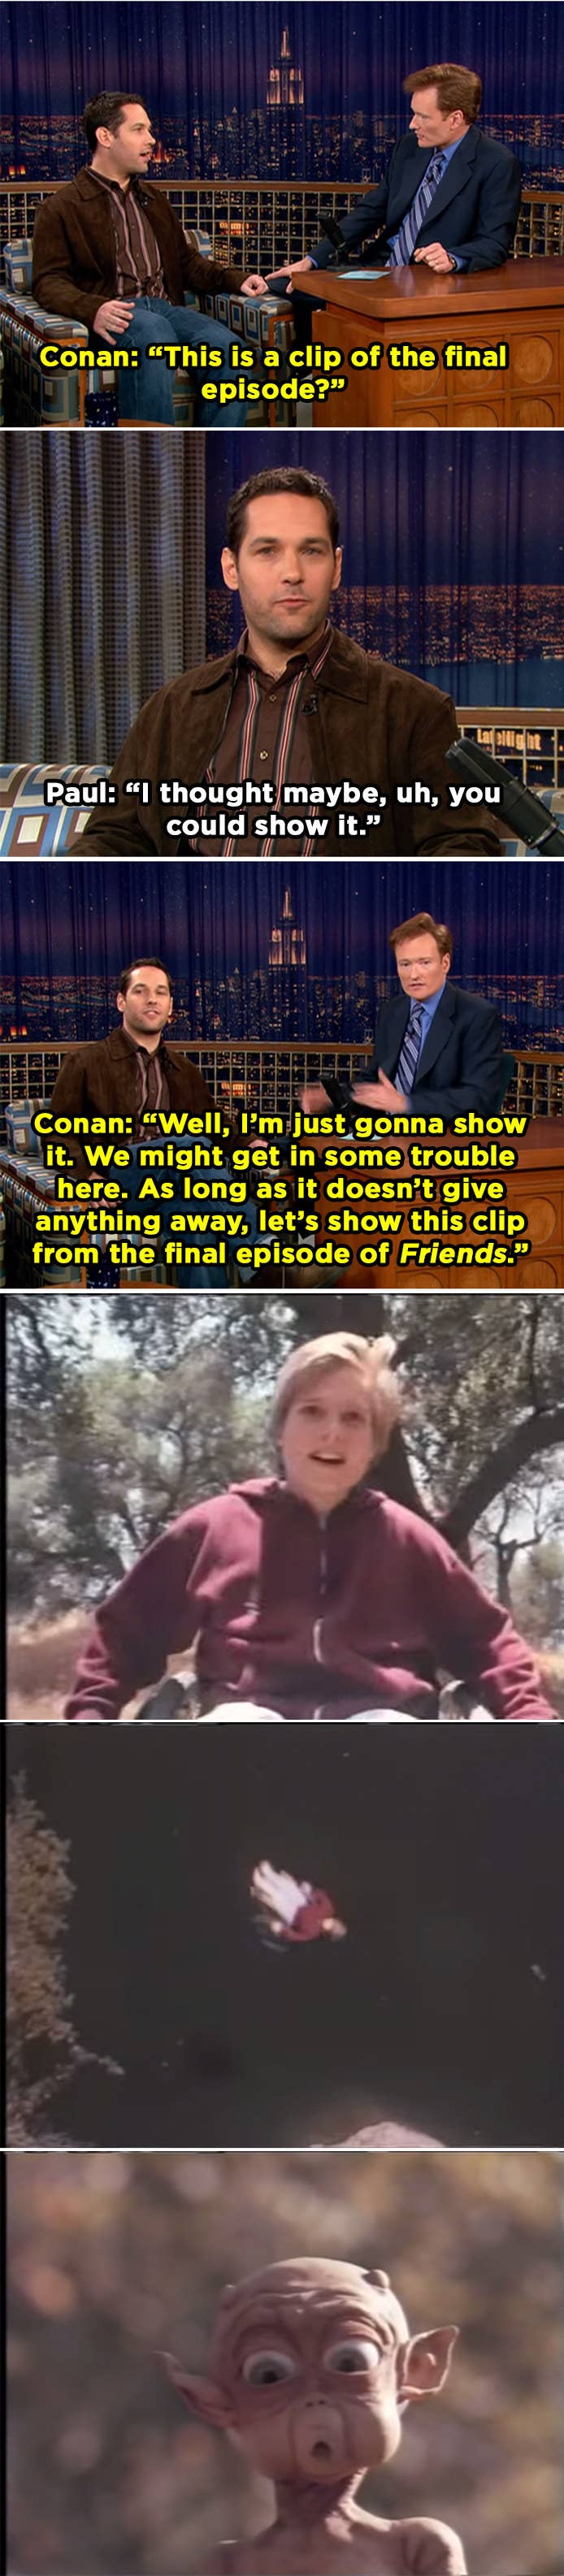 Paul Rudd pulls his 'Mac & Me' Rickroll on Conan one last time